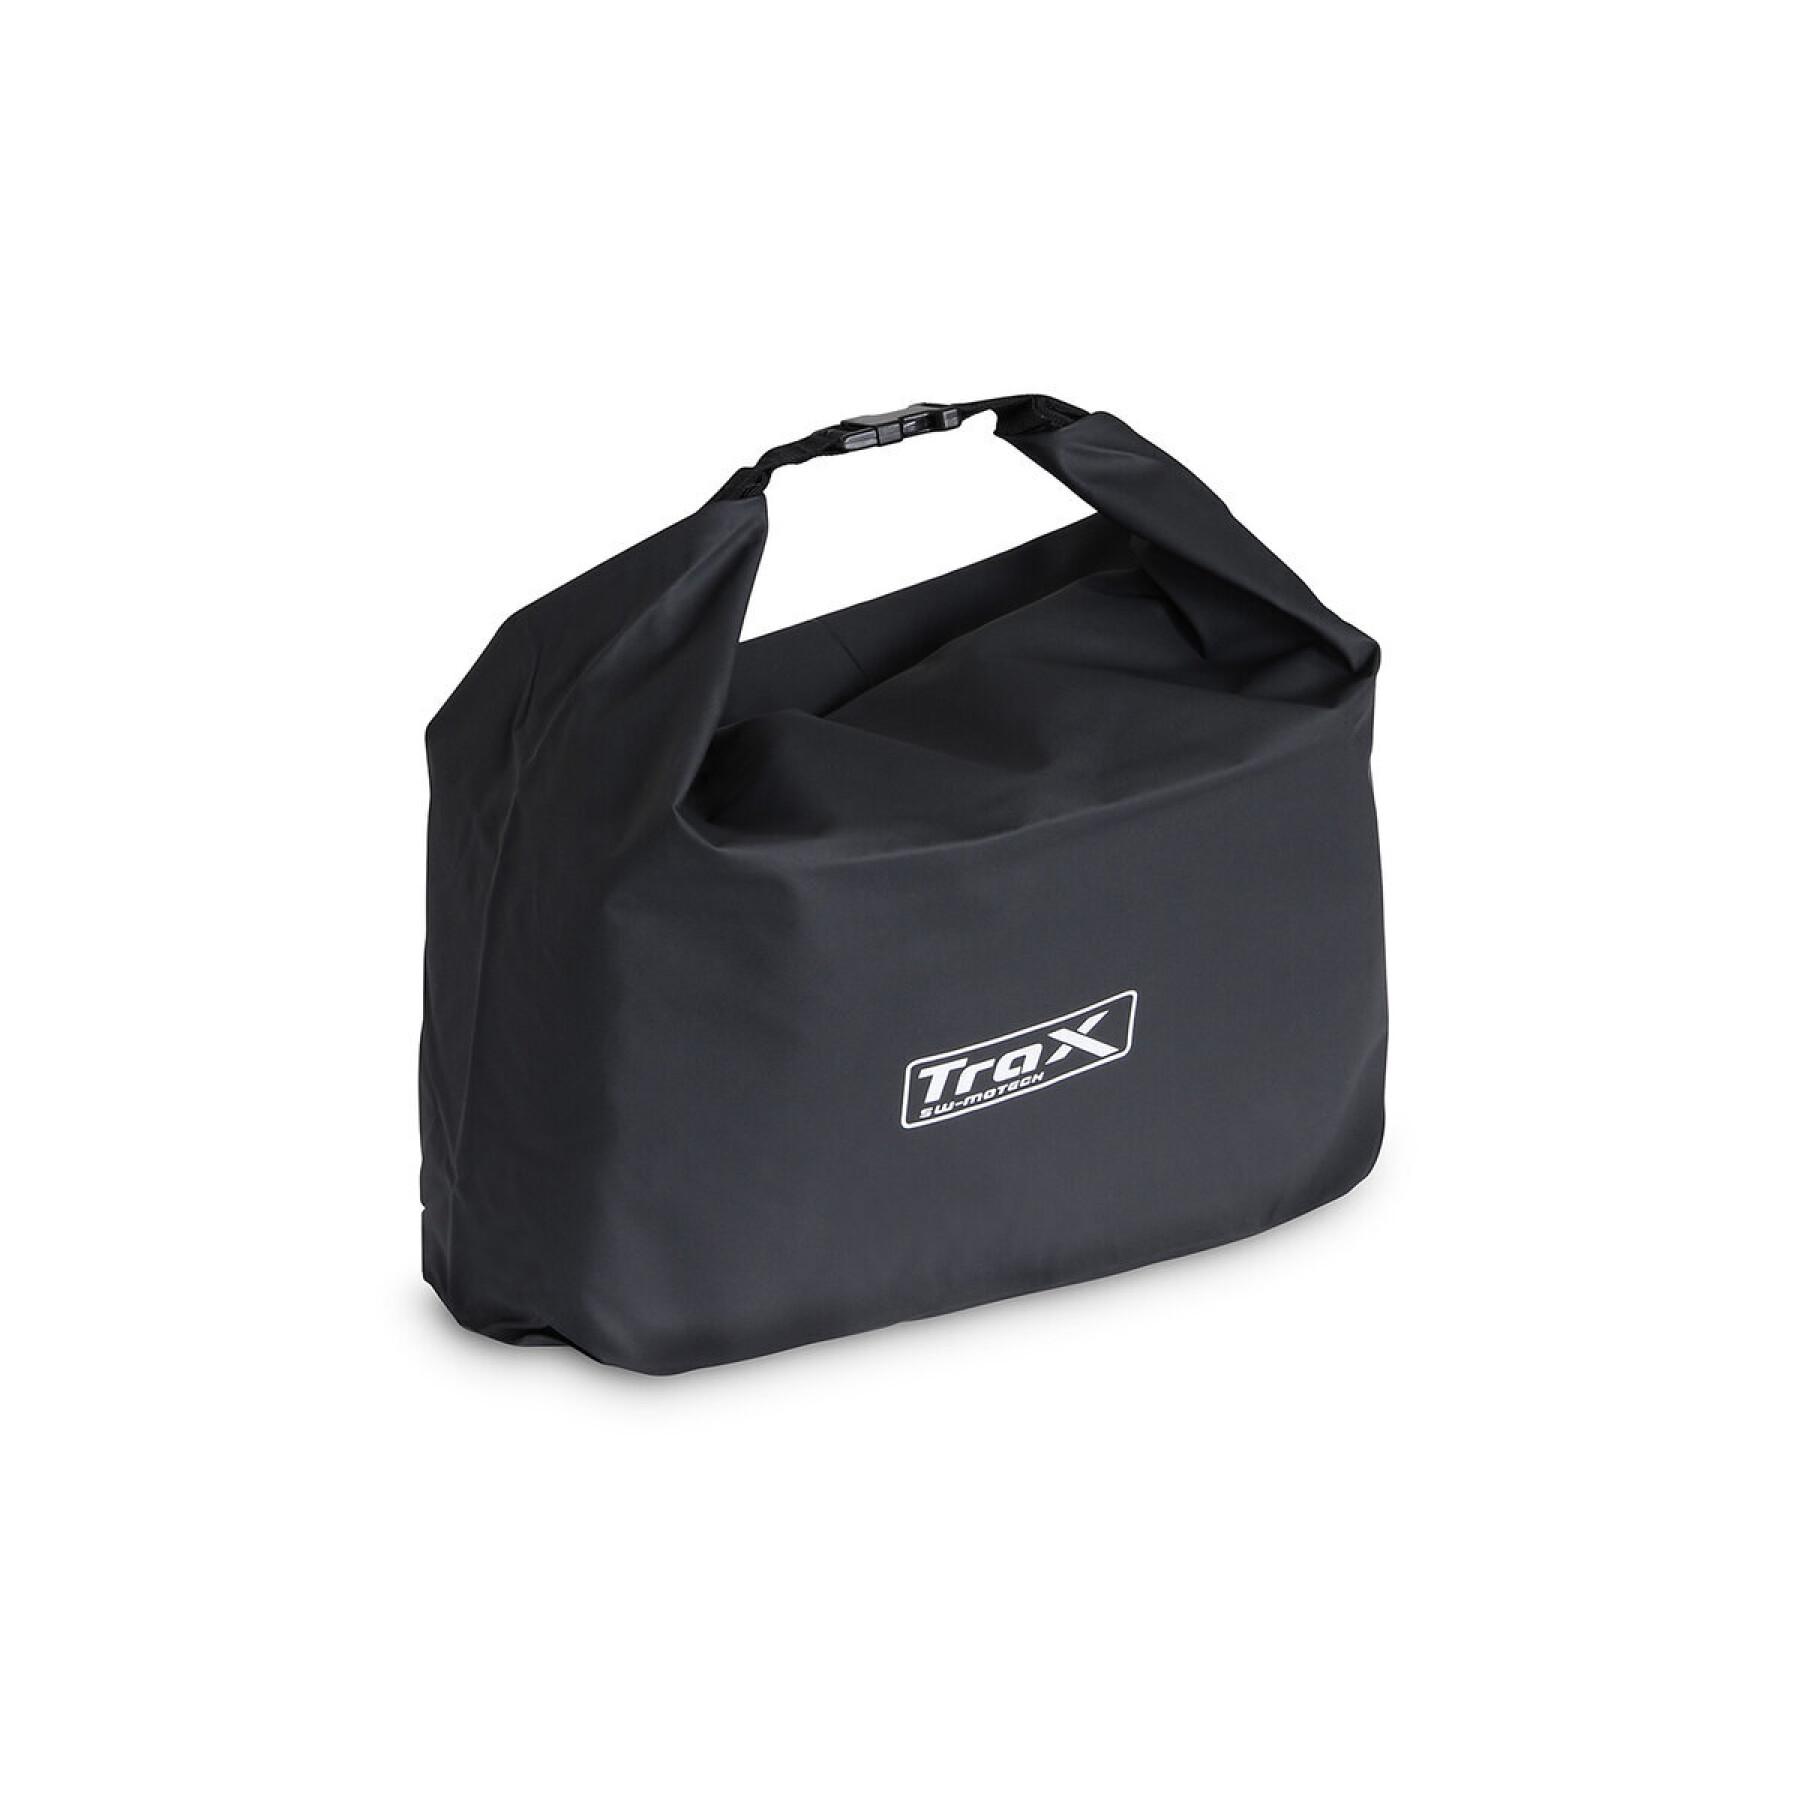 Waterproof inner bag for side cases SW-Motech Trax